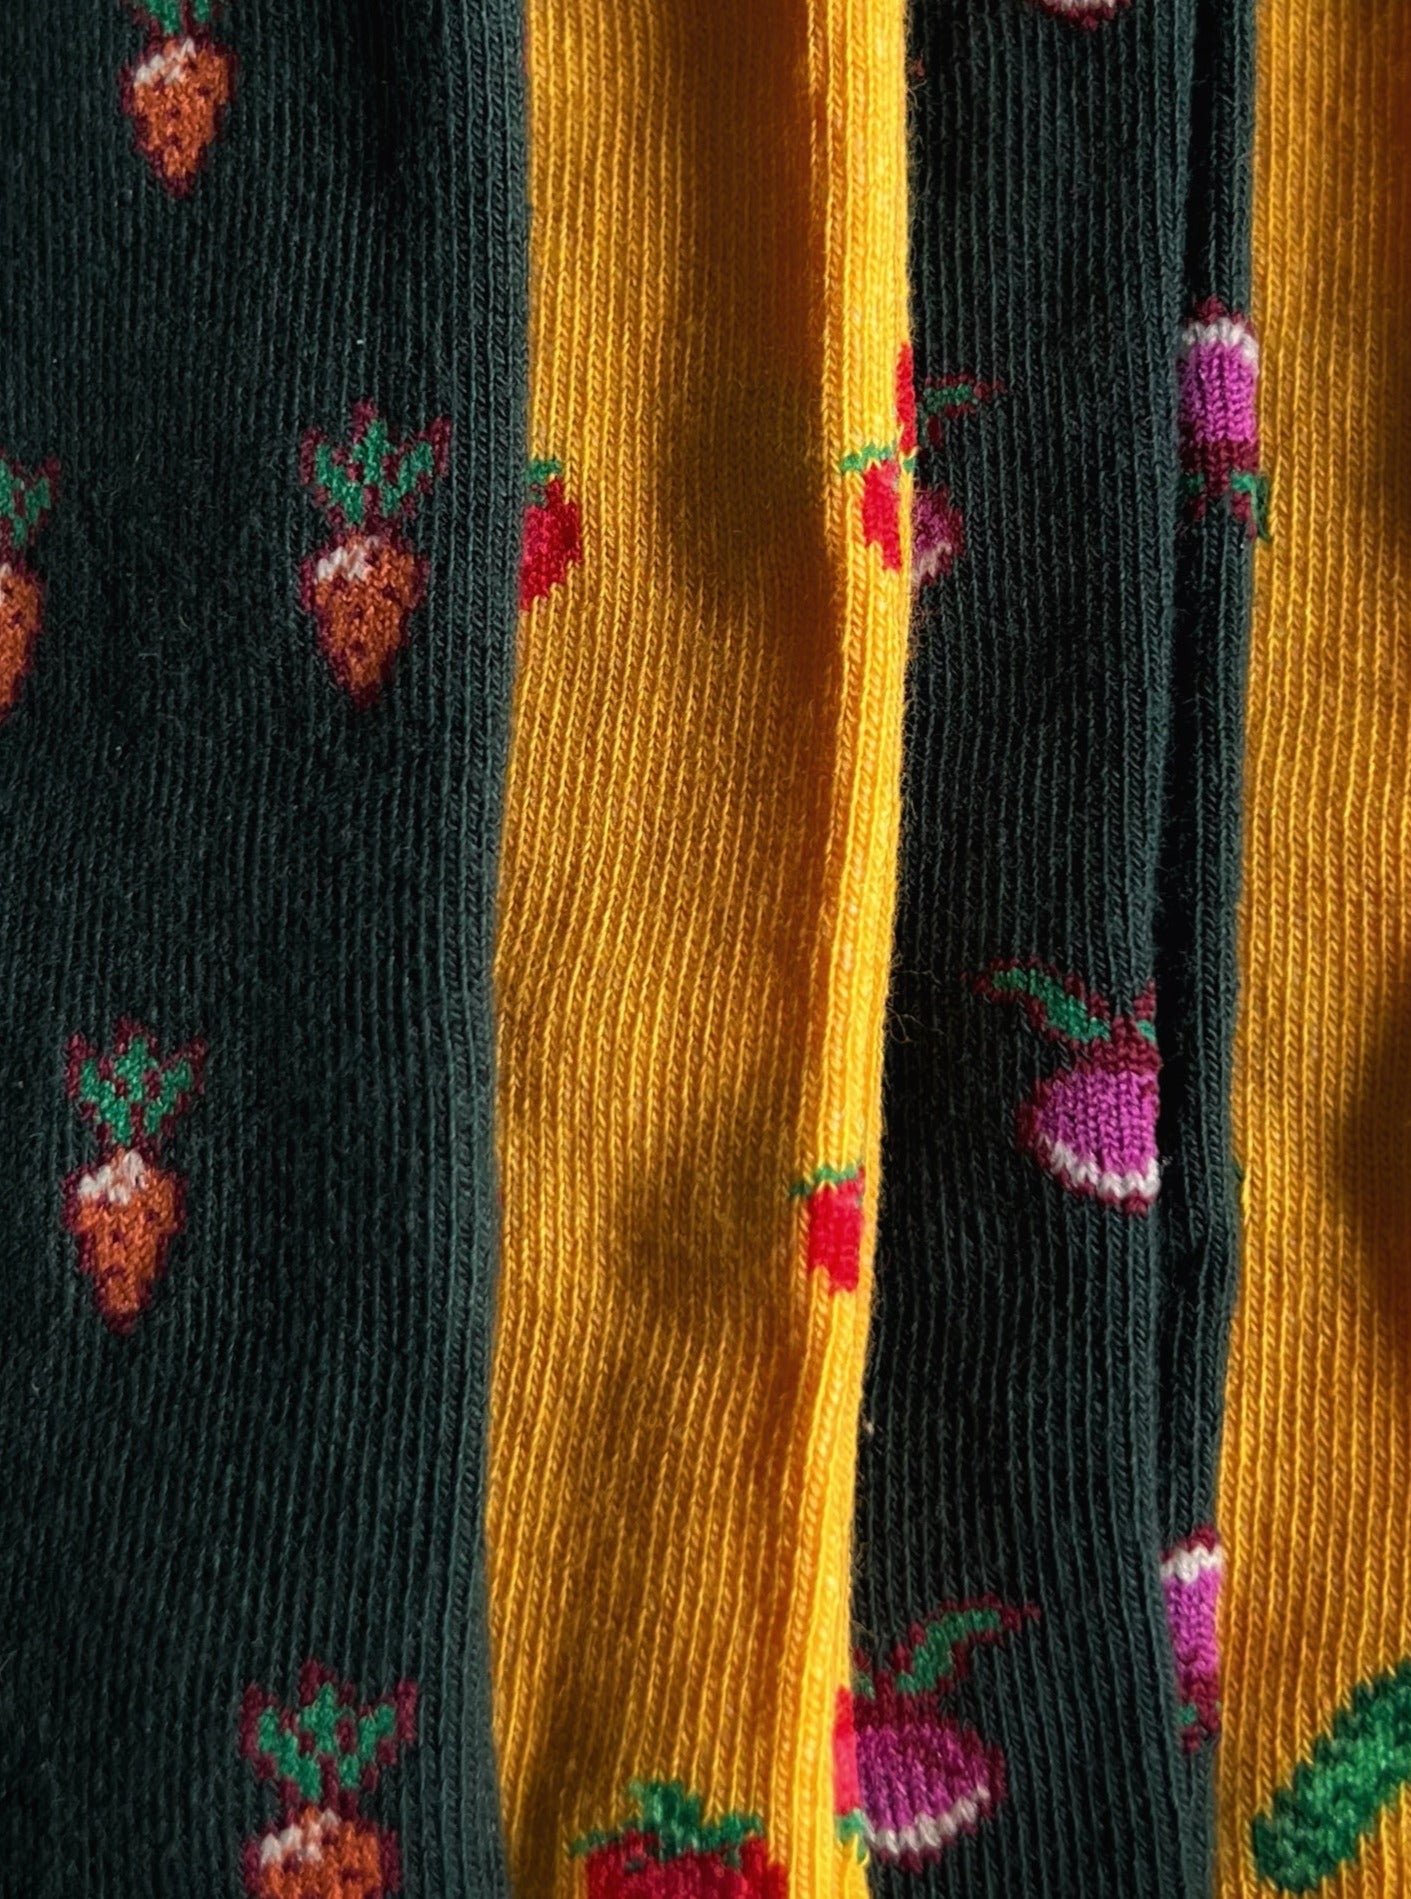 Set of 2 pairs of socks 'Gardener'